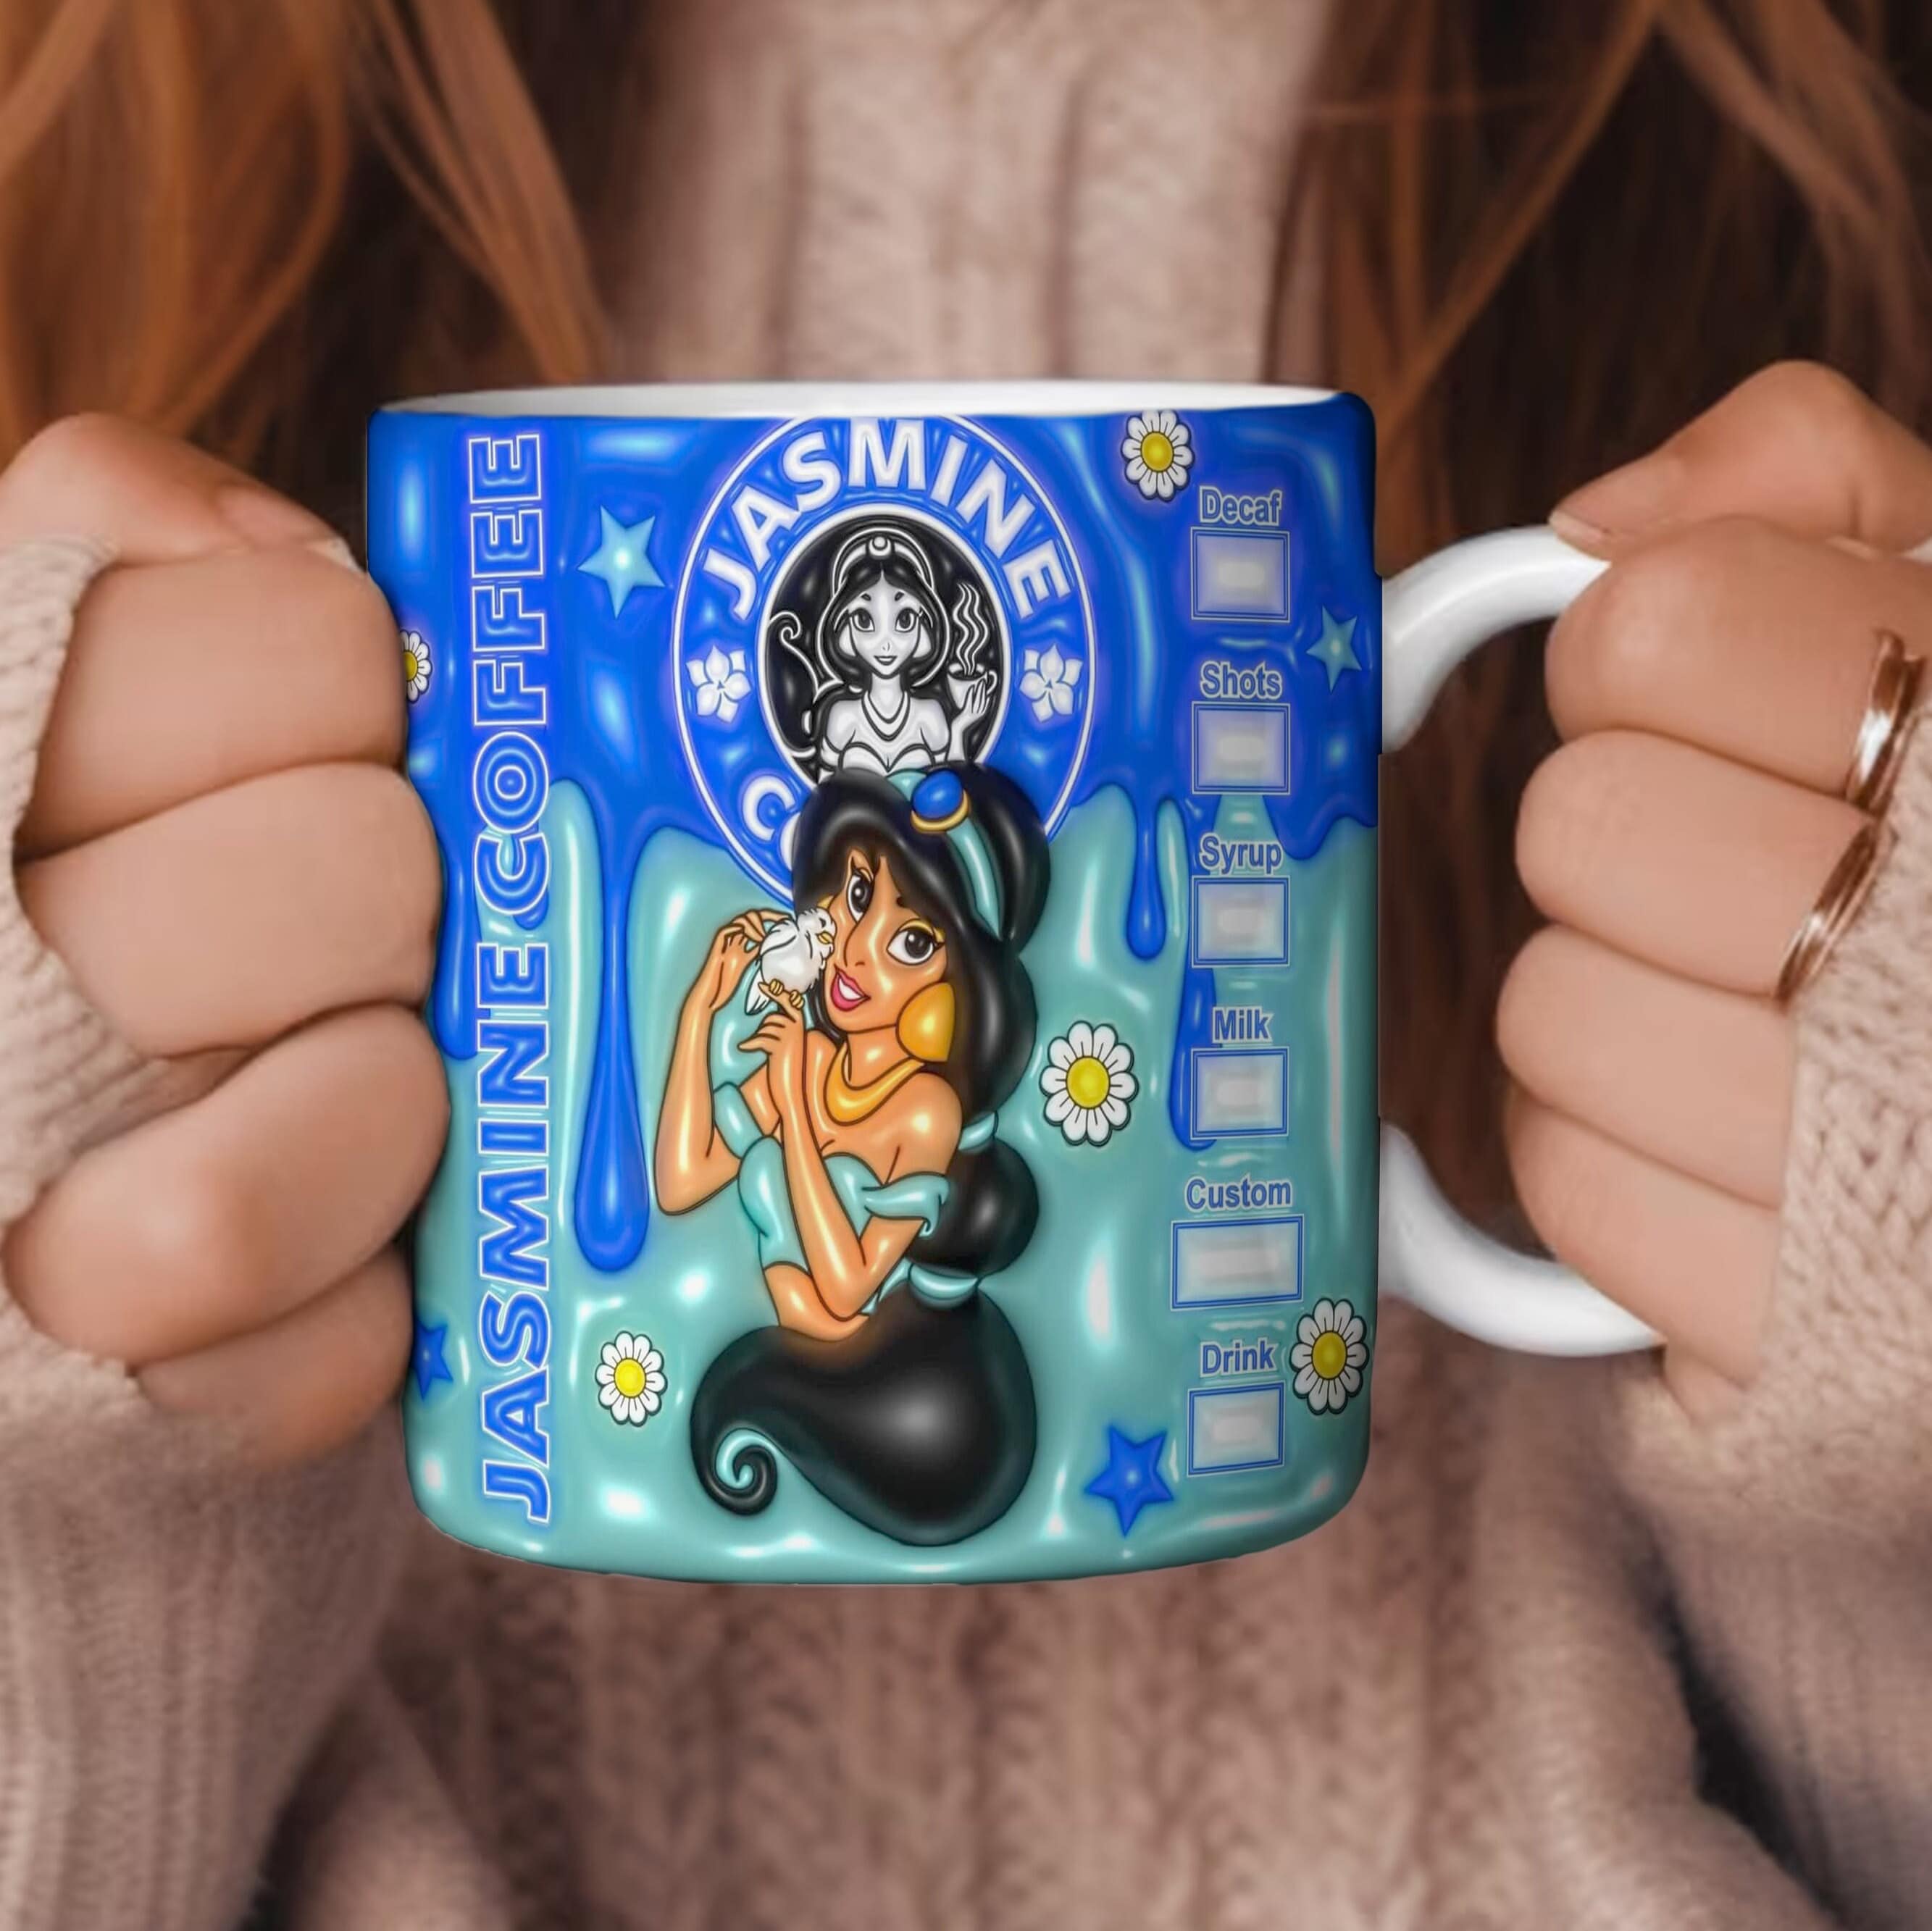 Disney Aladdin Genie Lets Make Some Magic Gradient Text Raglan Baseball Coffee  Mug by Kallaf Graci - Pixels Merch